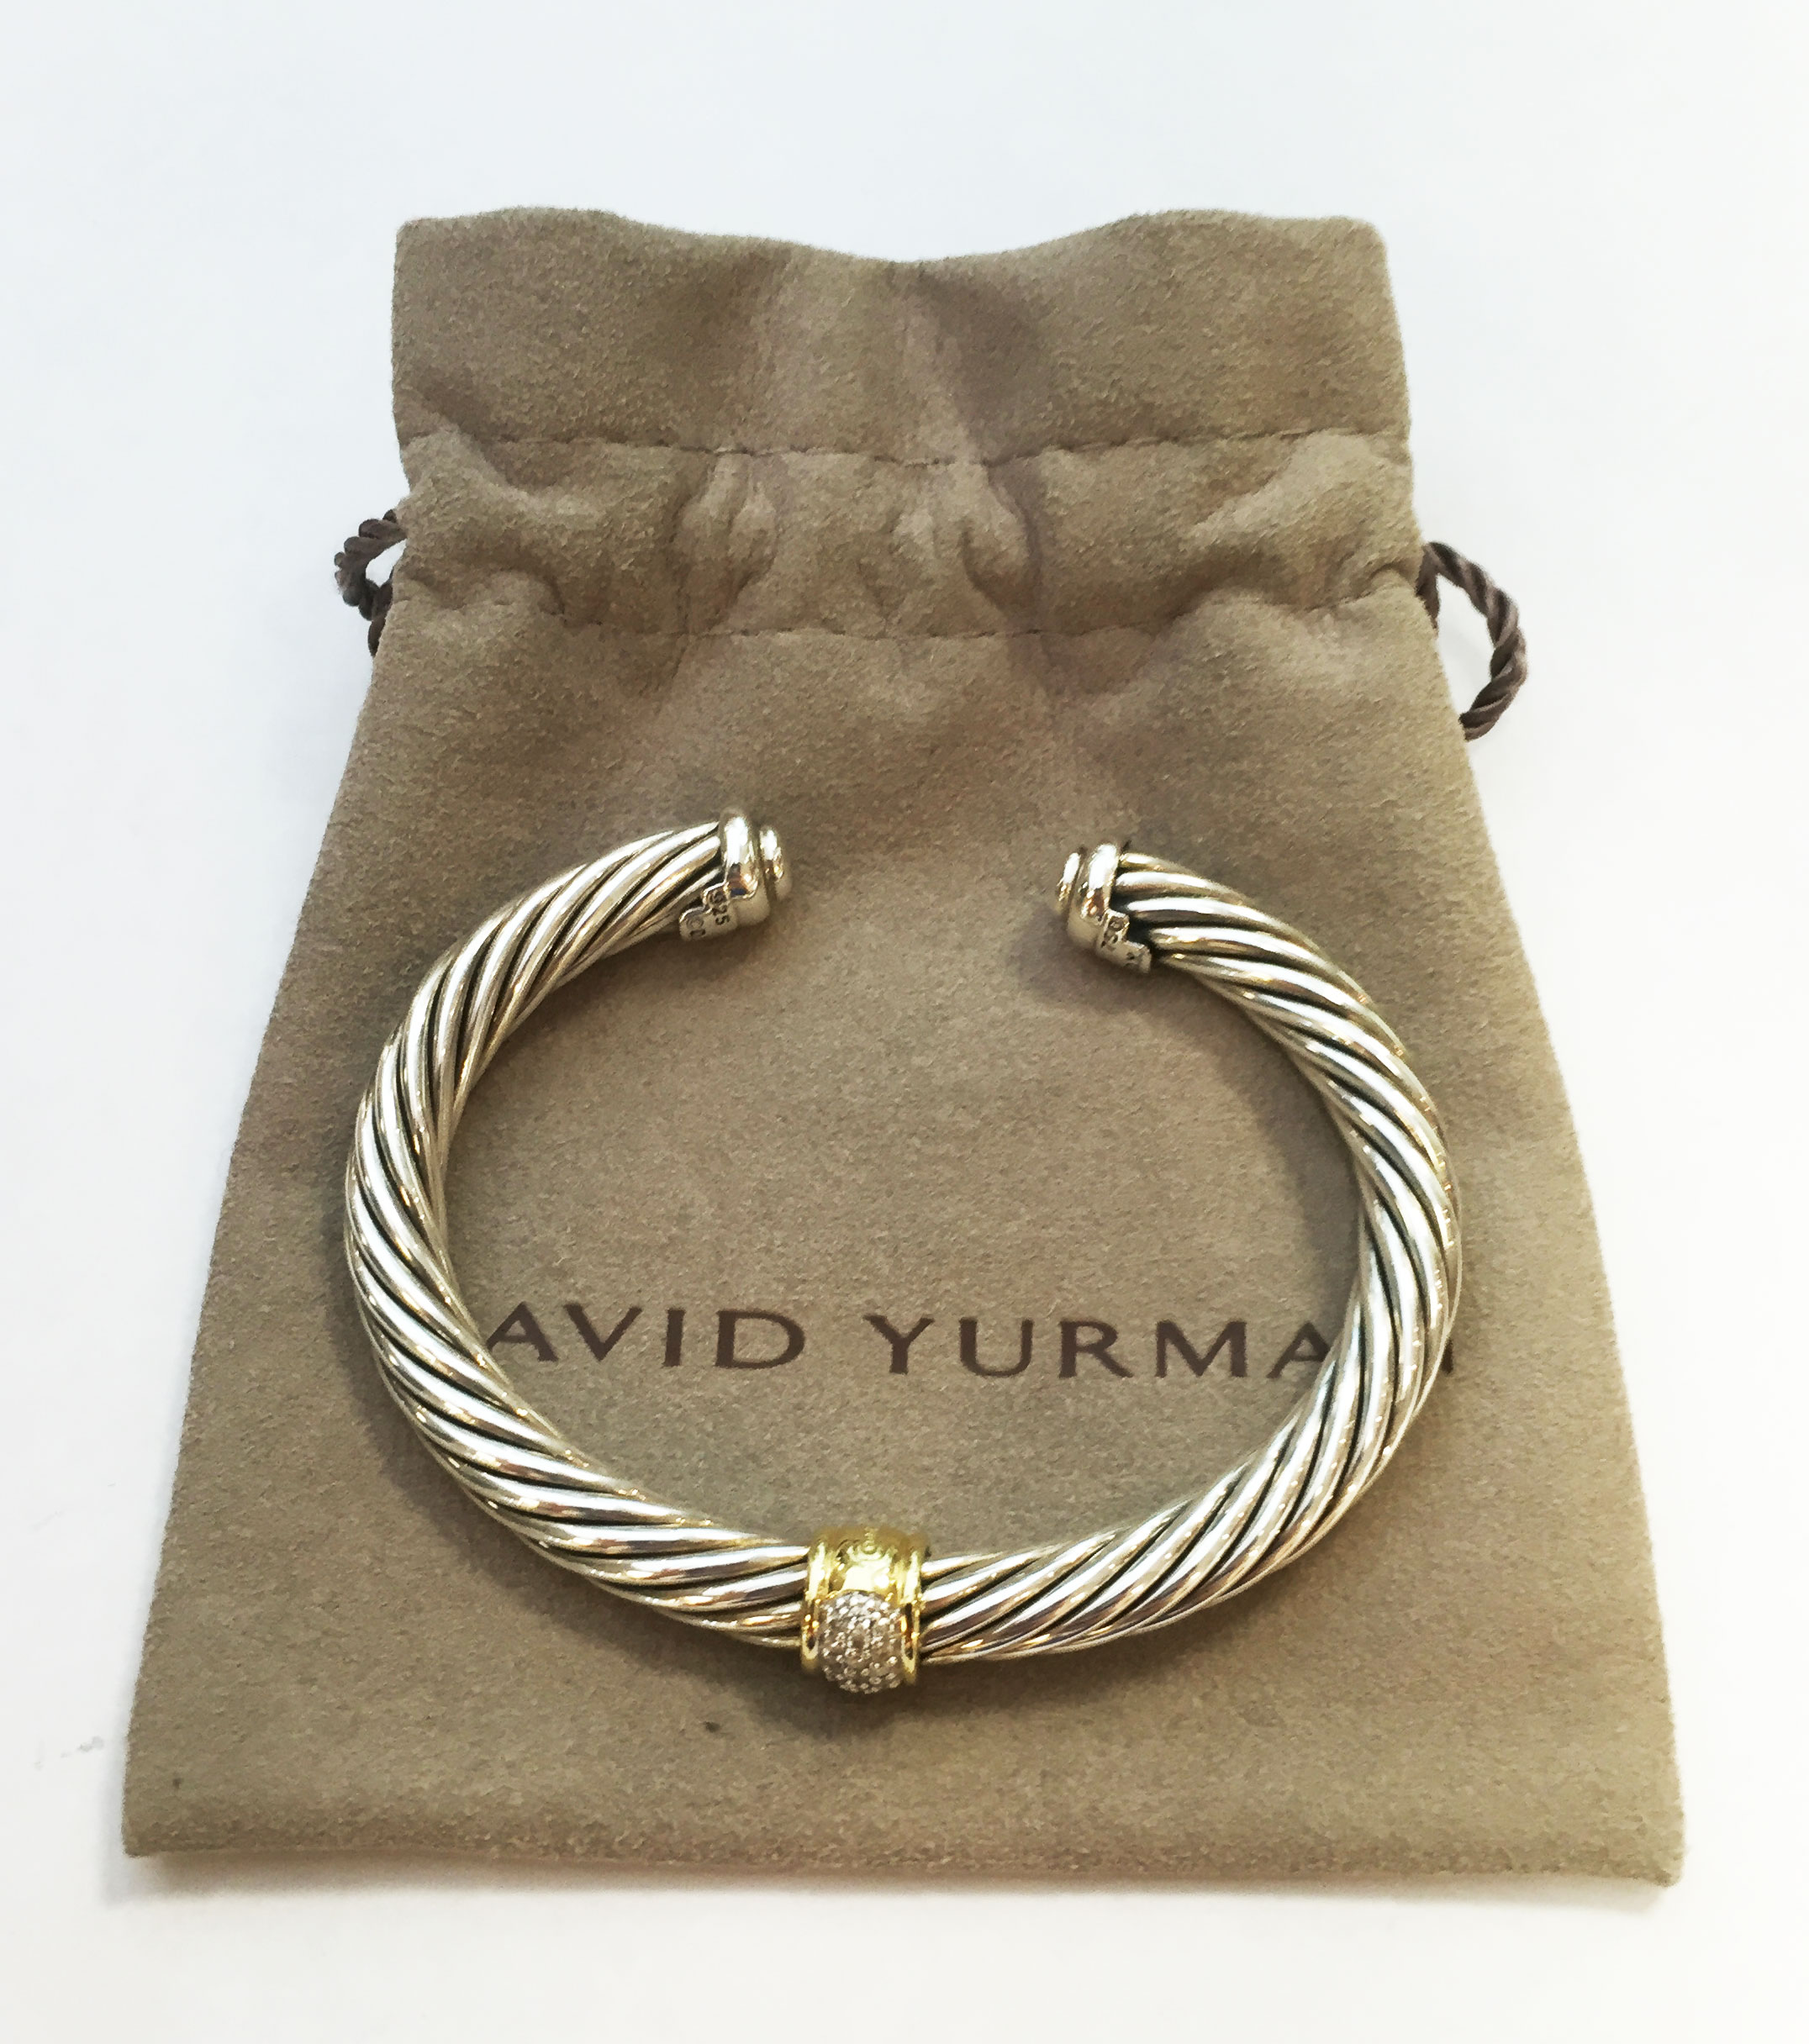 The David Yurman Collection | Wilmington, North Carolina | Brand Name ...